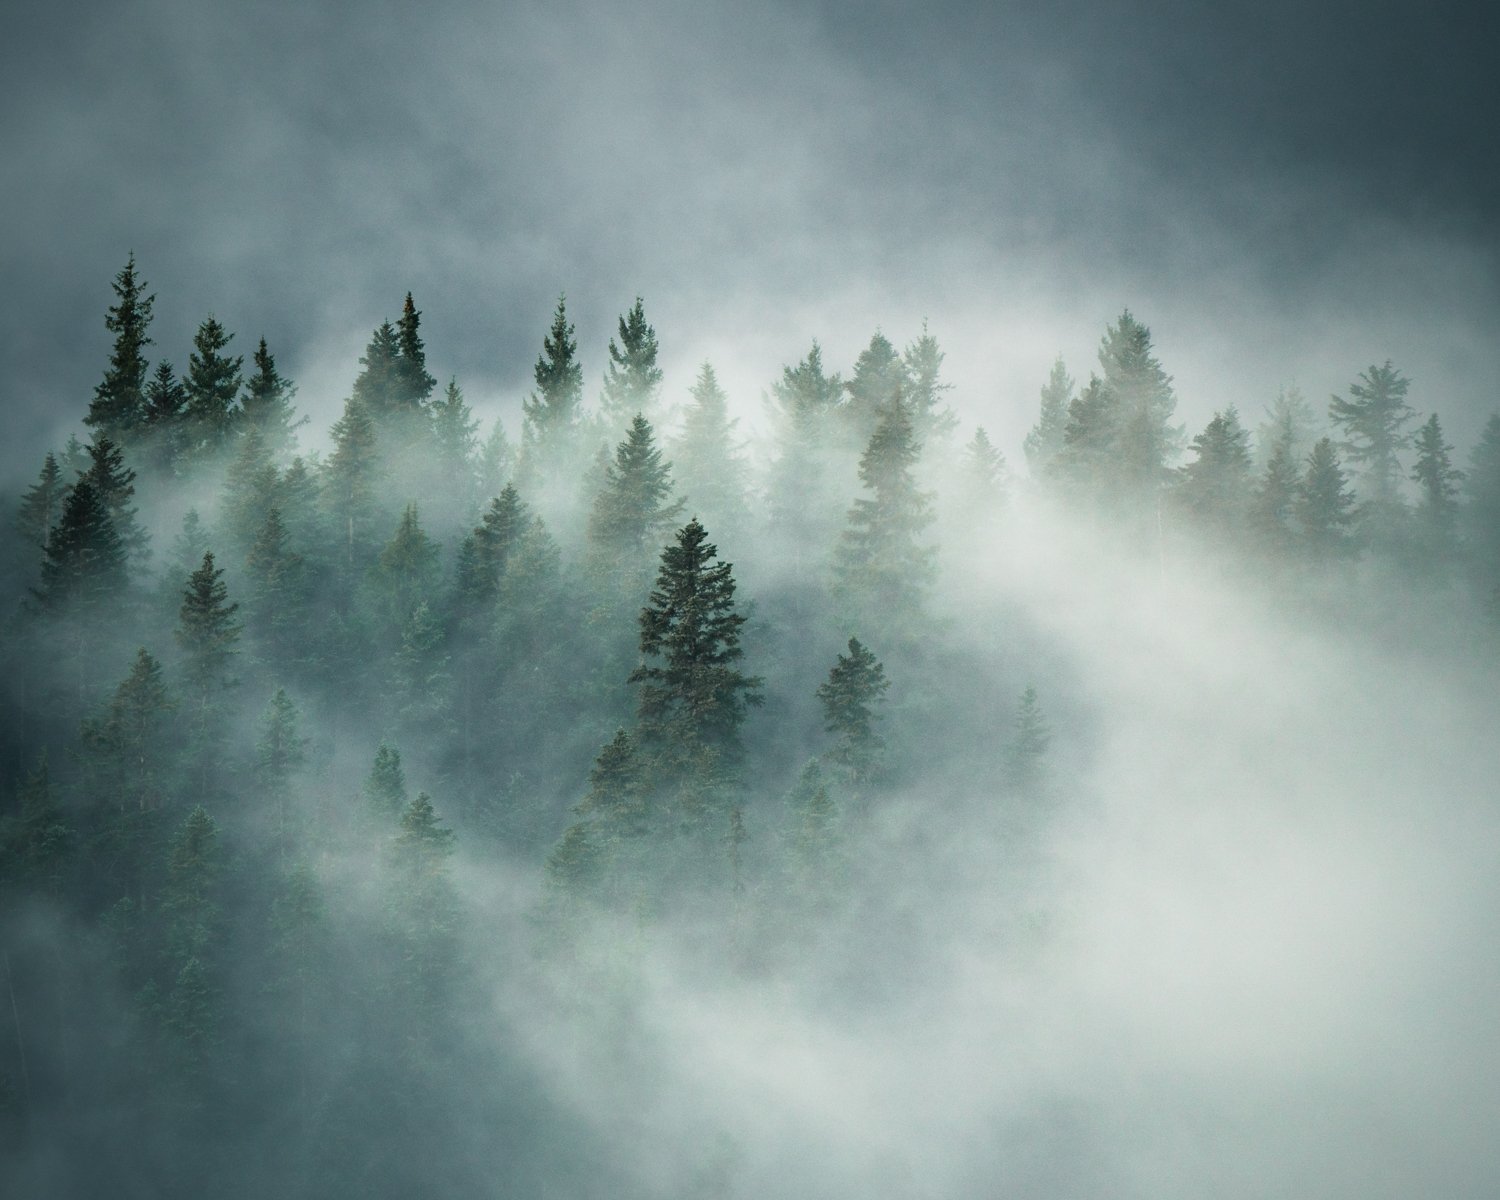 mount-rainier-photography-workshop-foggy-trees.jpg